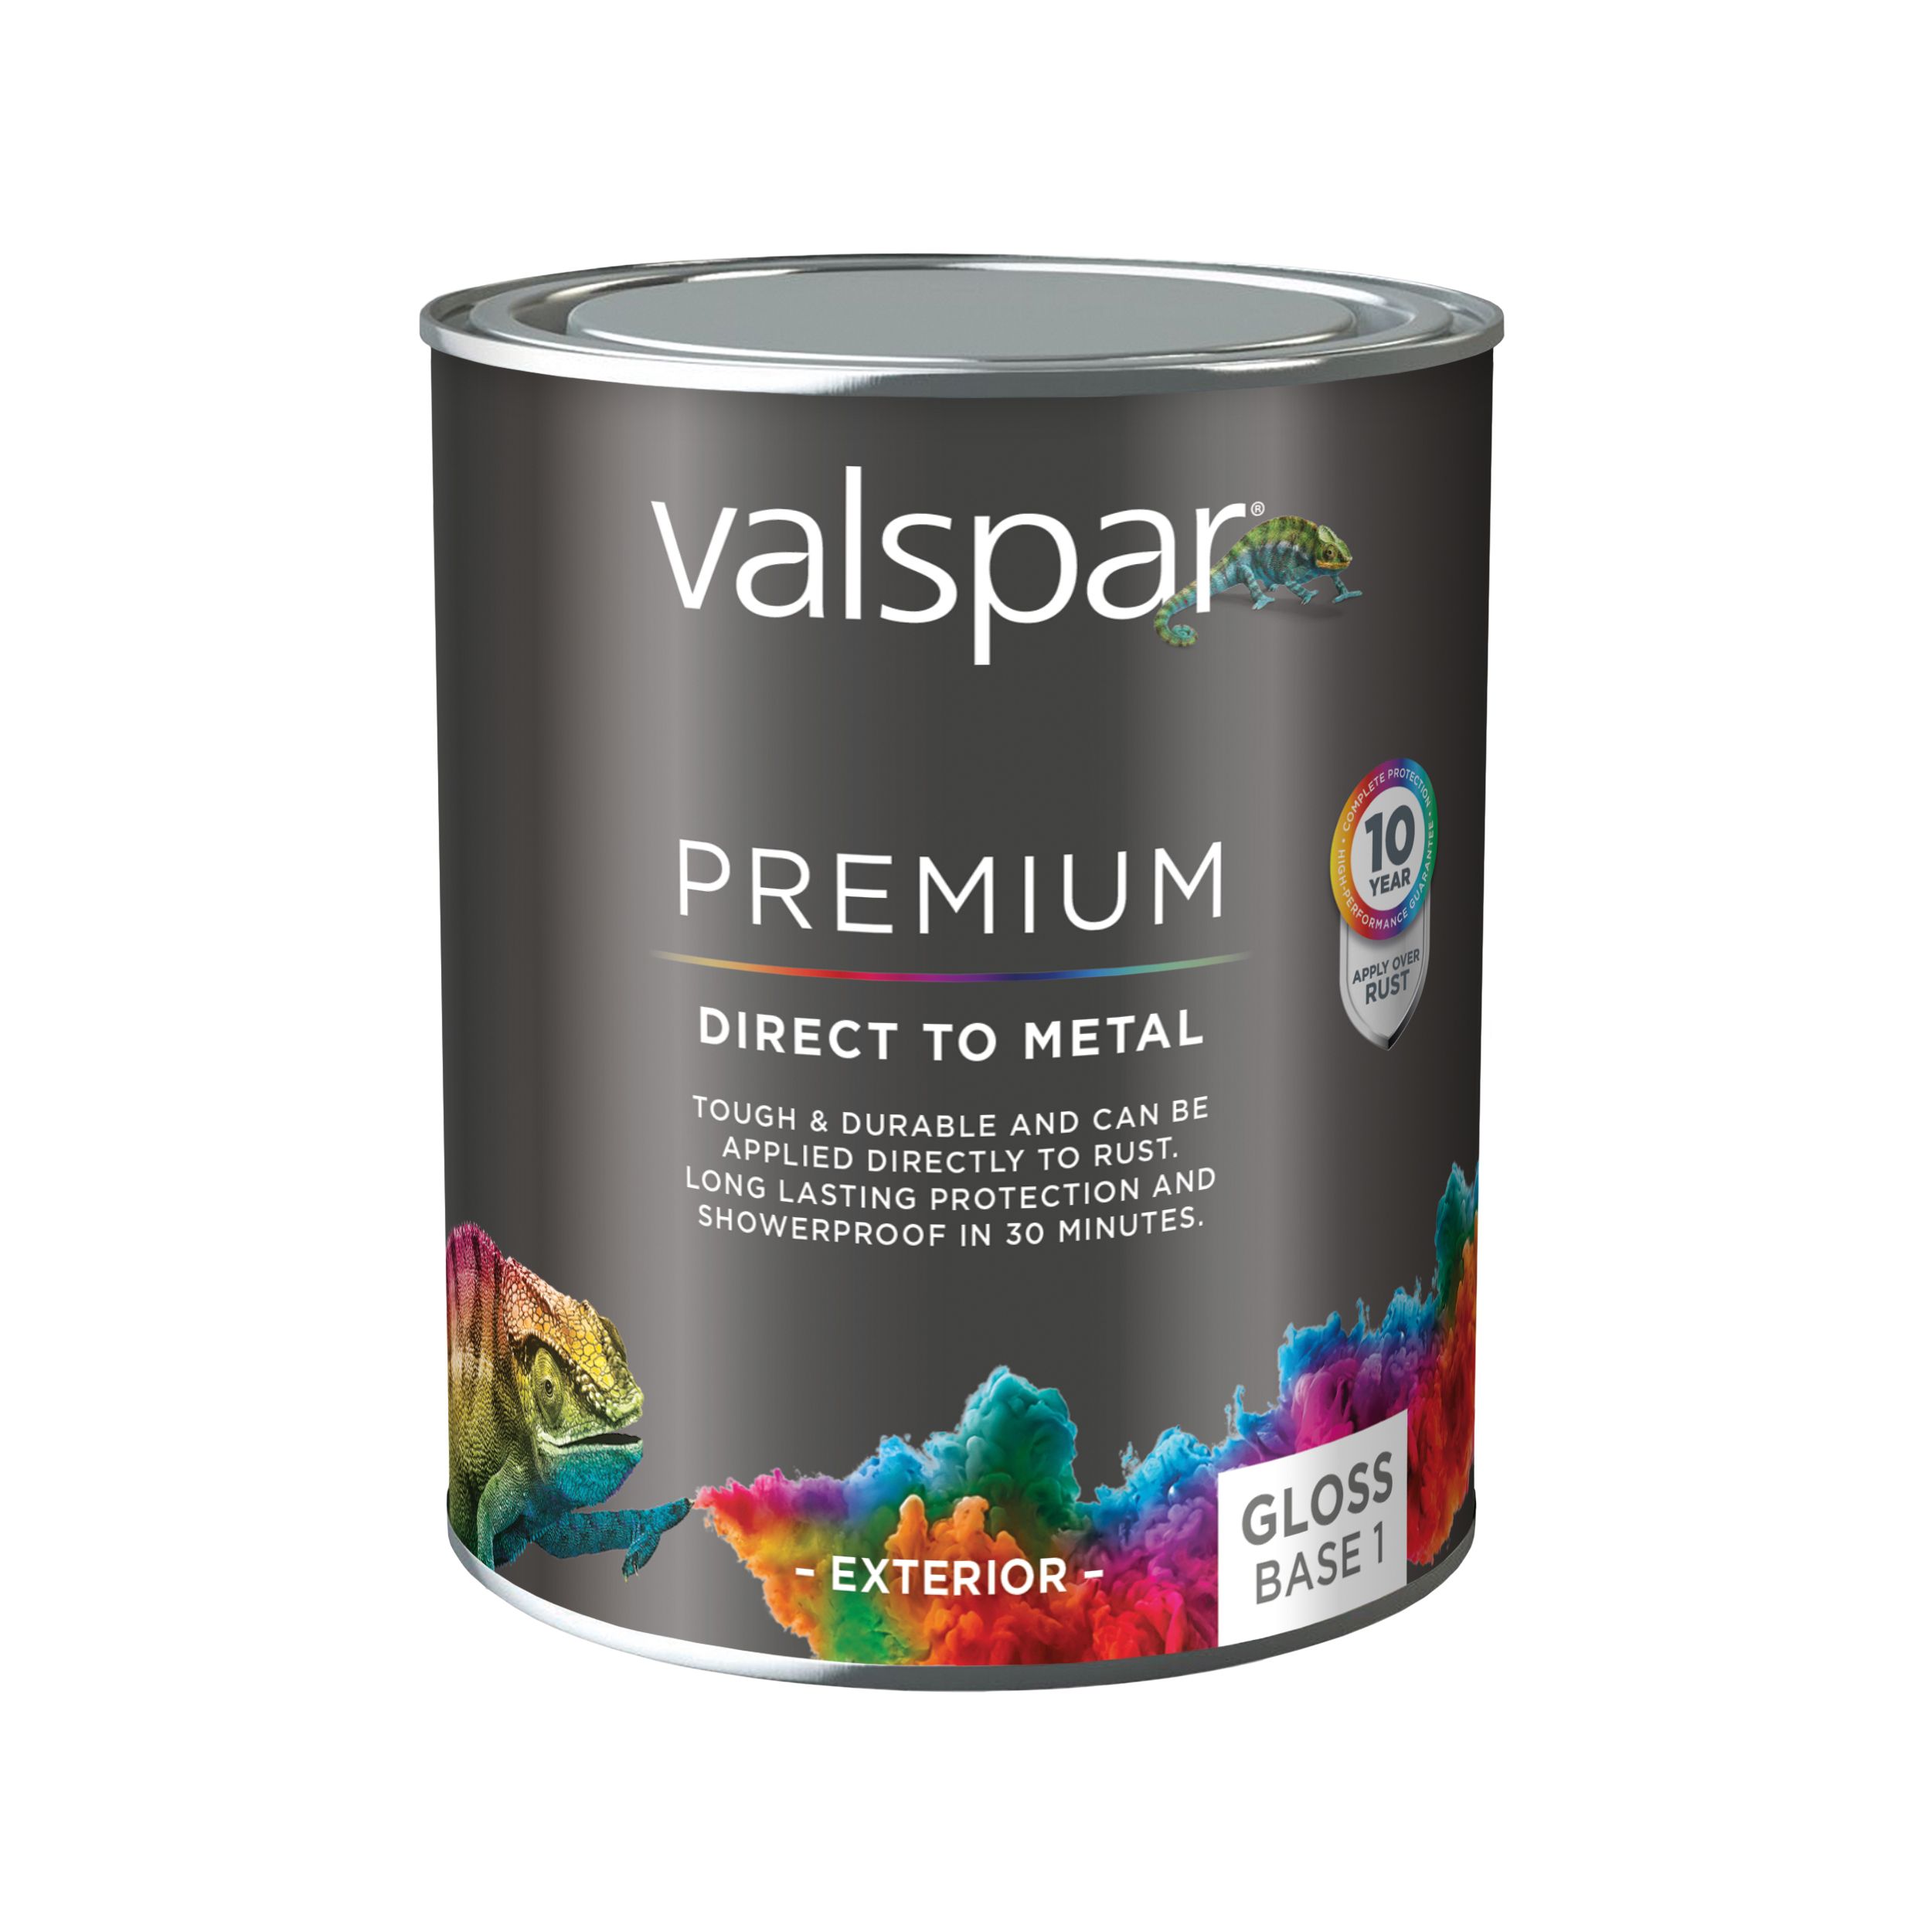 Valspar Premium Direct to Metal Exterior Metal & wood Gloss Basecoat, Mixed, Base A, 750ml